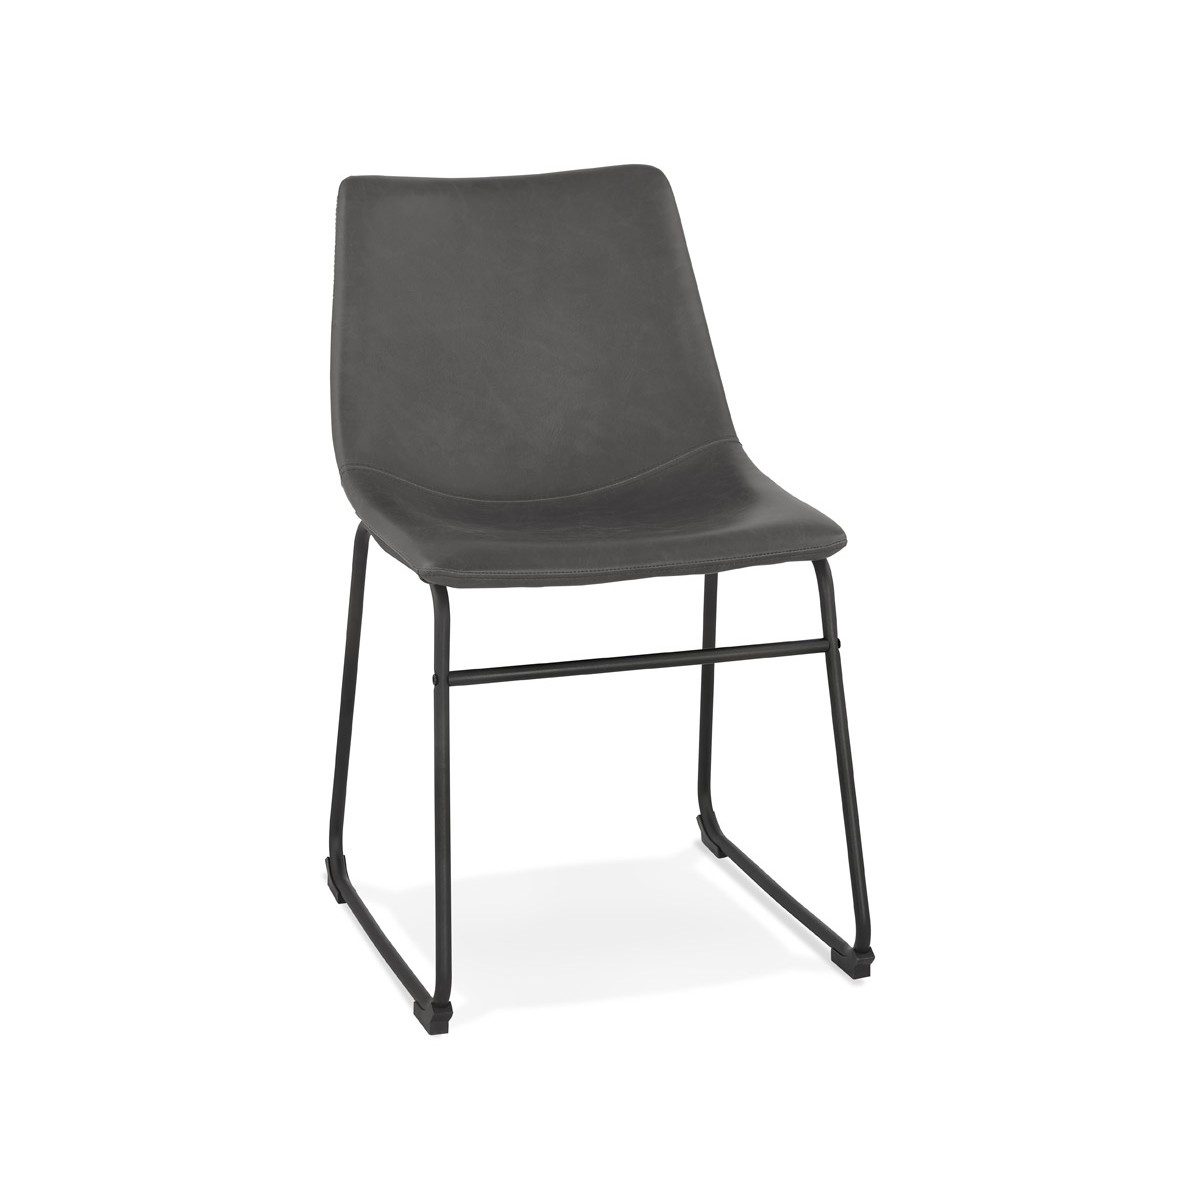 schwarze (dunkelgrau) industrielle Stuhl Story JOE und AMP 6867 - Vintage Metallfüße